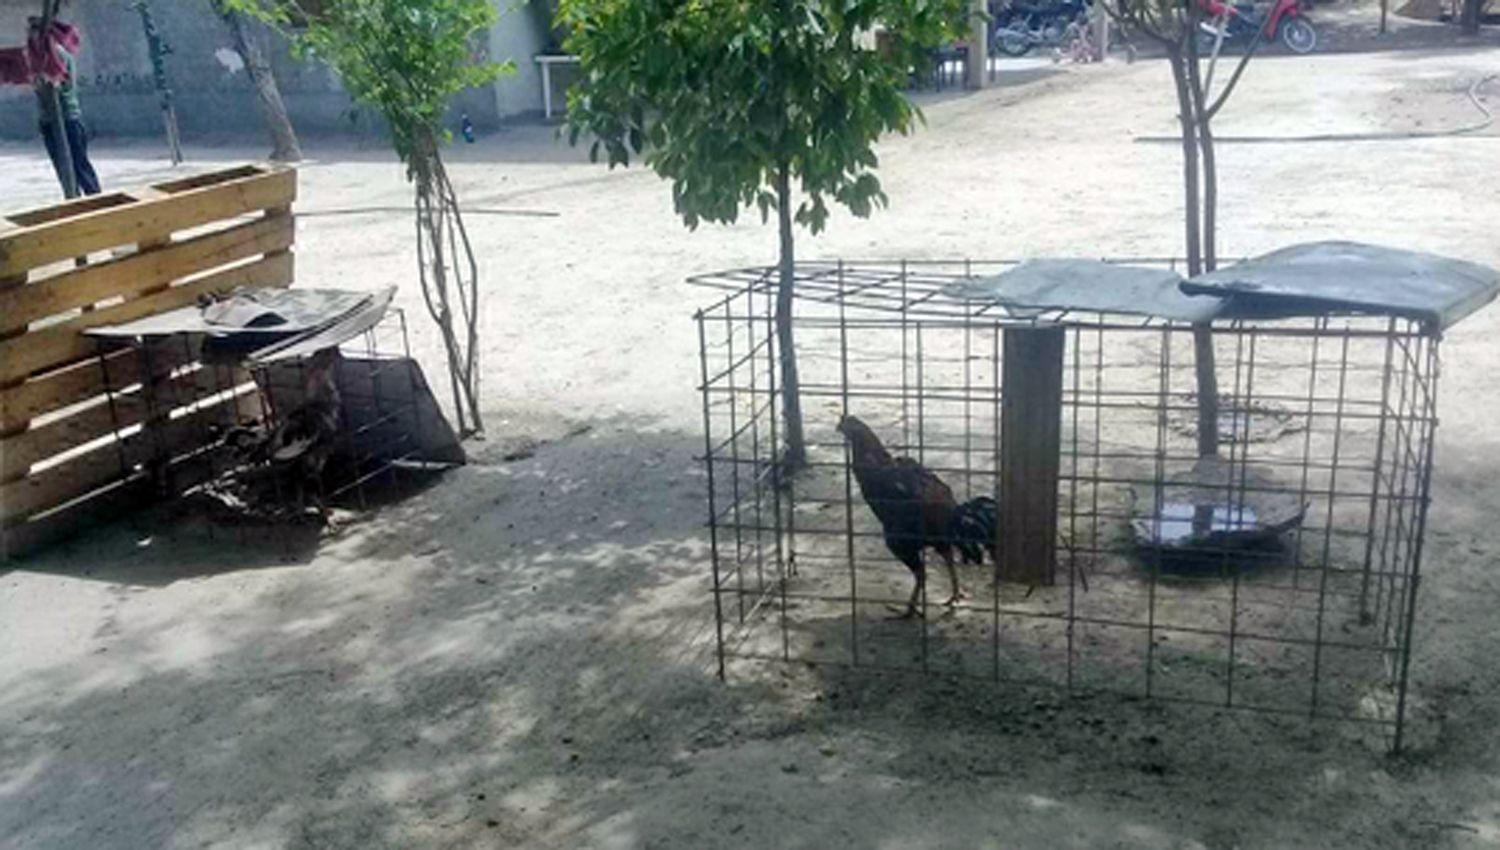 Desarticulan dos eventos de rintildeas de gallos ilegales